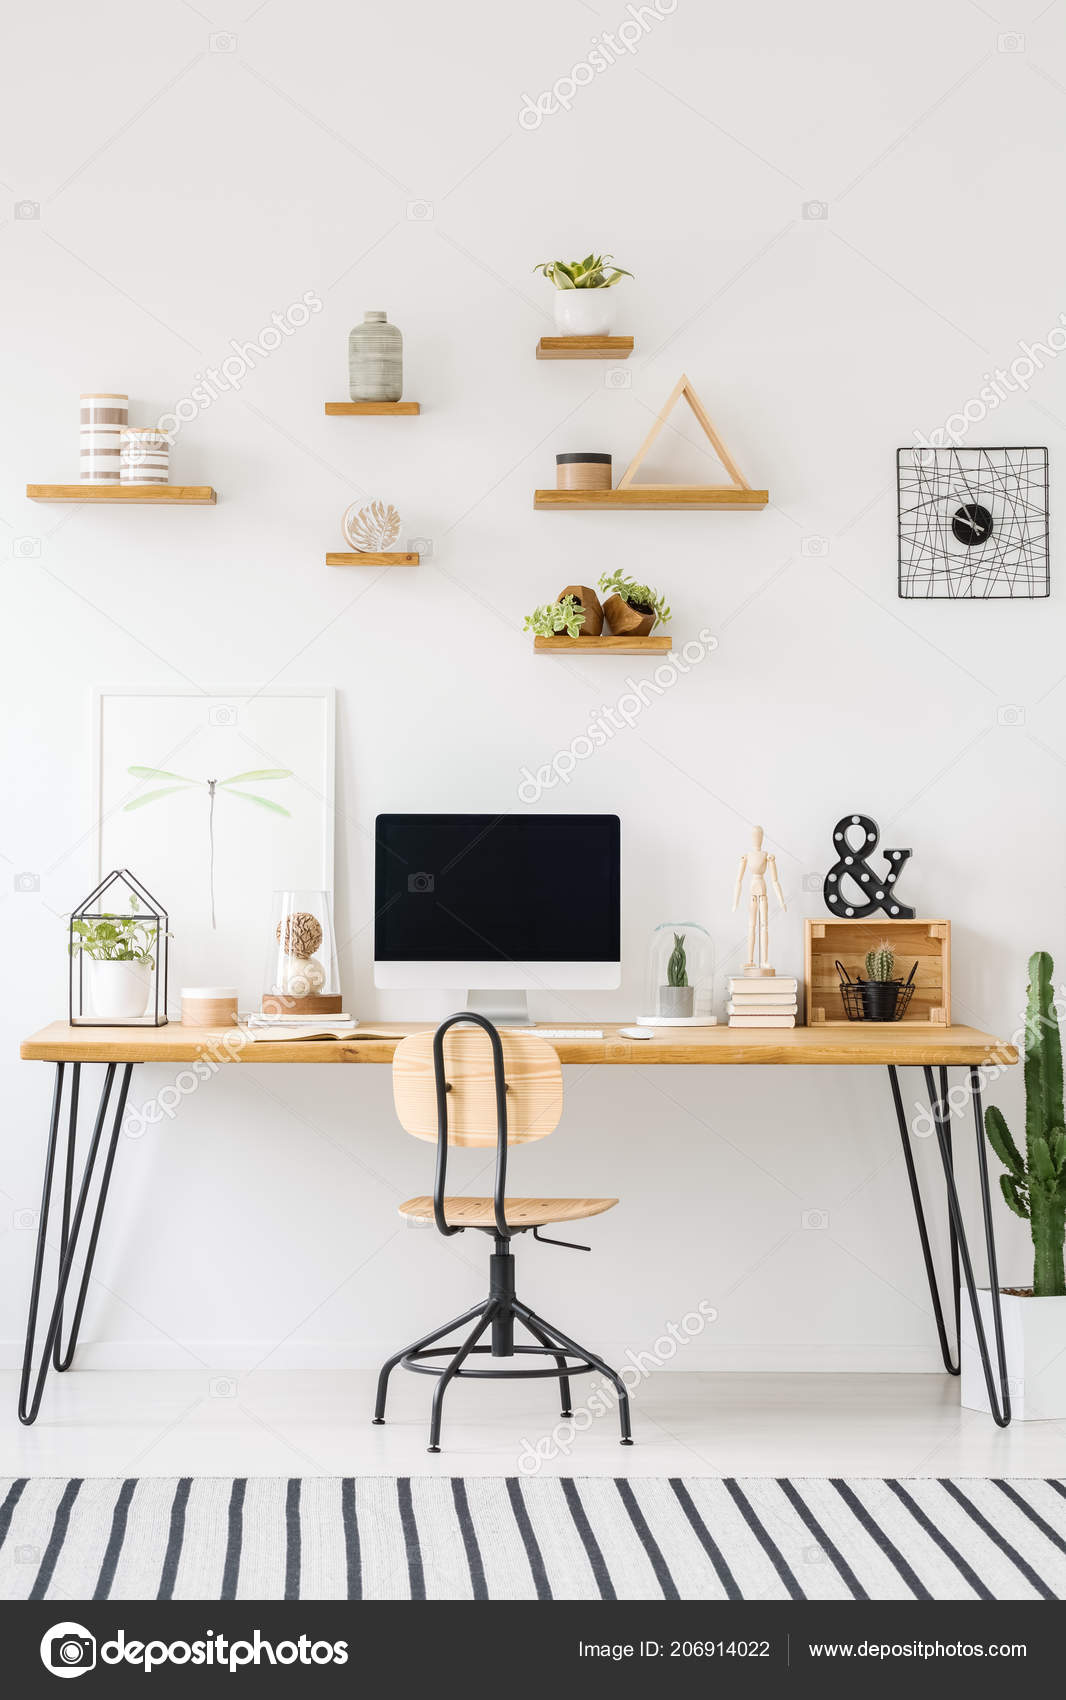 Wooden shelves plants pots white wall industrial desk modern desktop stock photo by photographeeeu